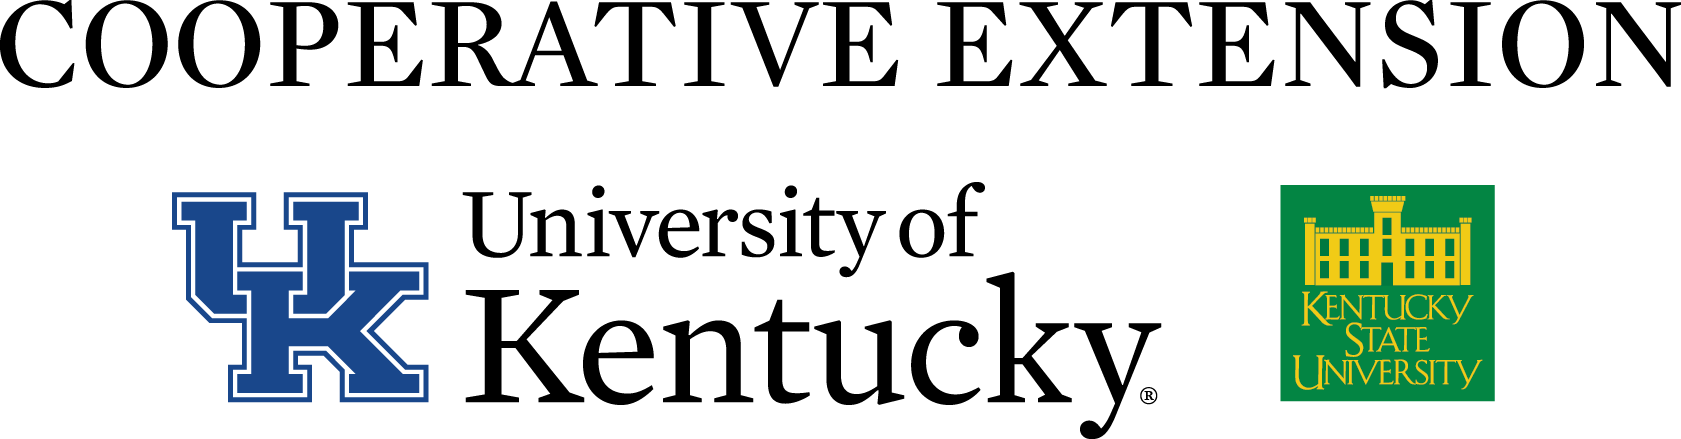 UK, KSU, and Coooperative Extension Combo Logo